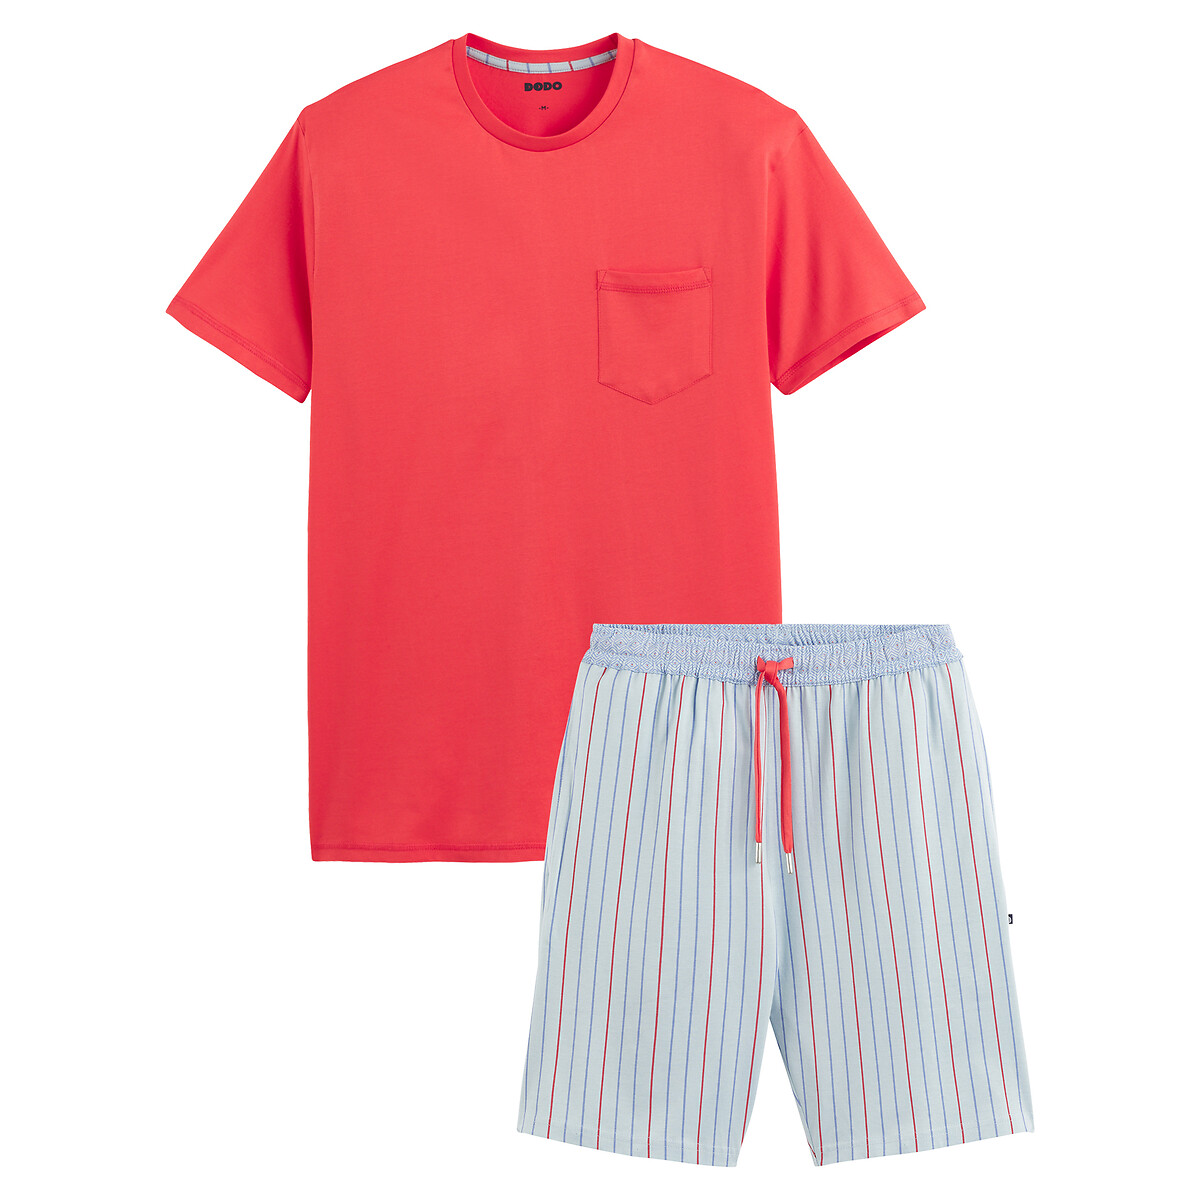 Пижама короткая с круглым вырезом  L красный LaRedoute, размер L